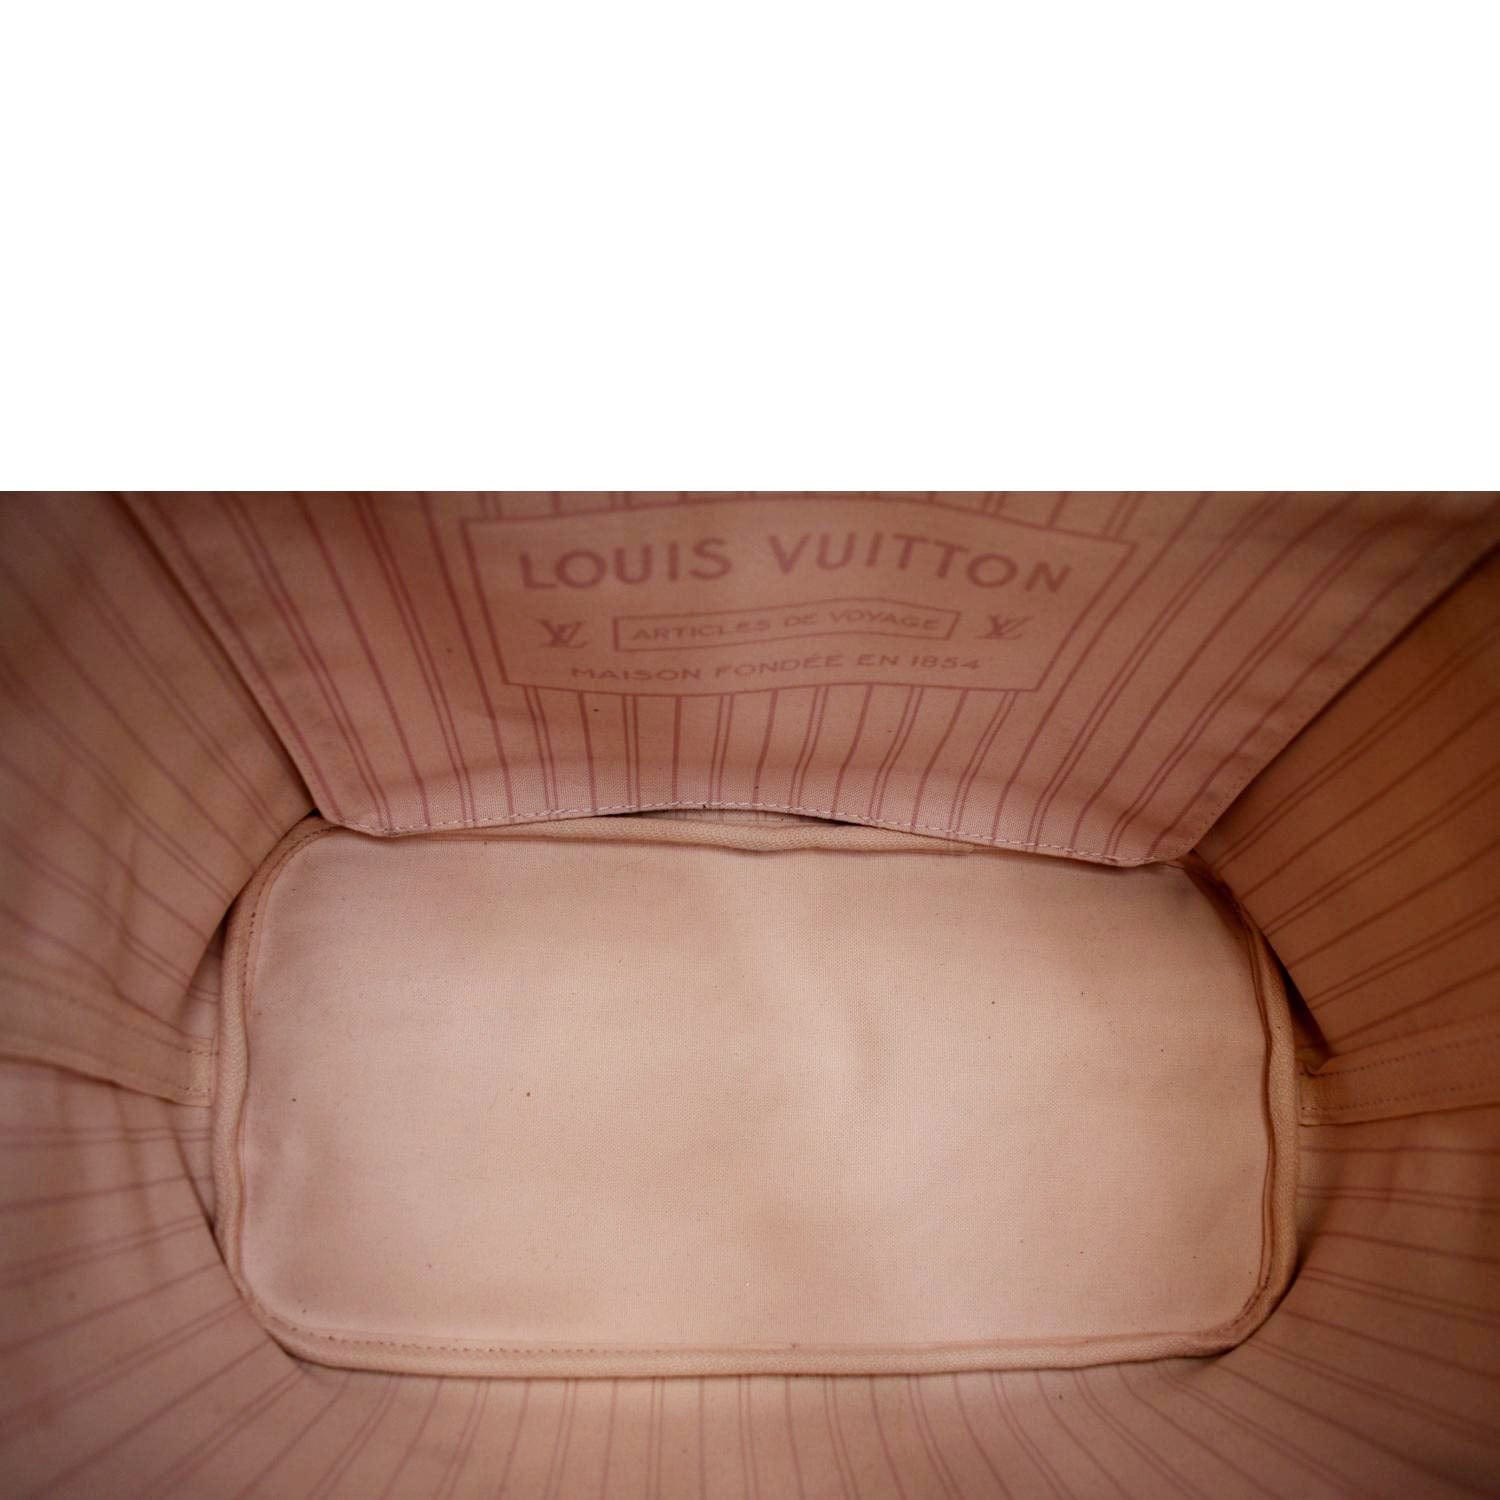 Louis Vuitton, Bags, Authentic Louis Vuitton Neverfull Mm Damier Ebene  Rose Ballerine